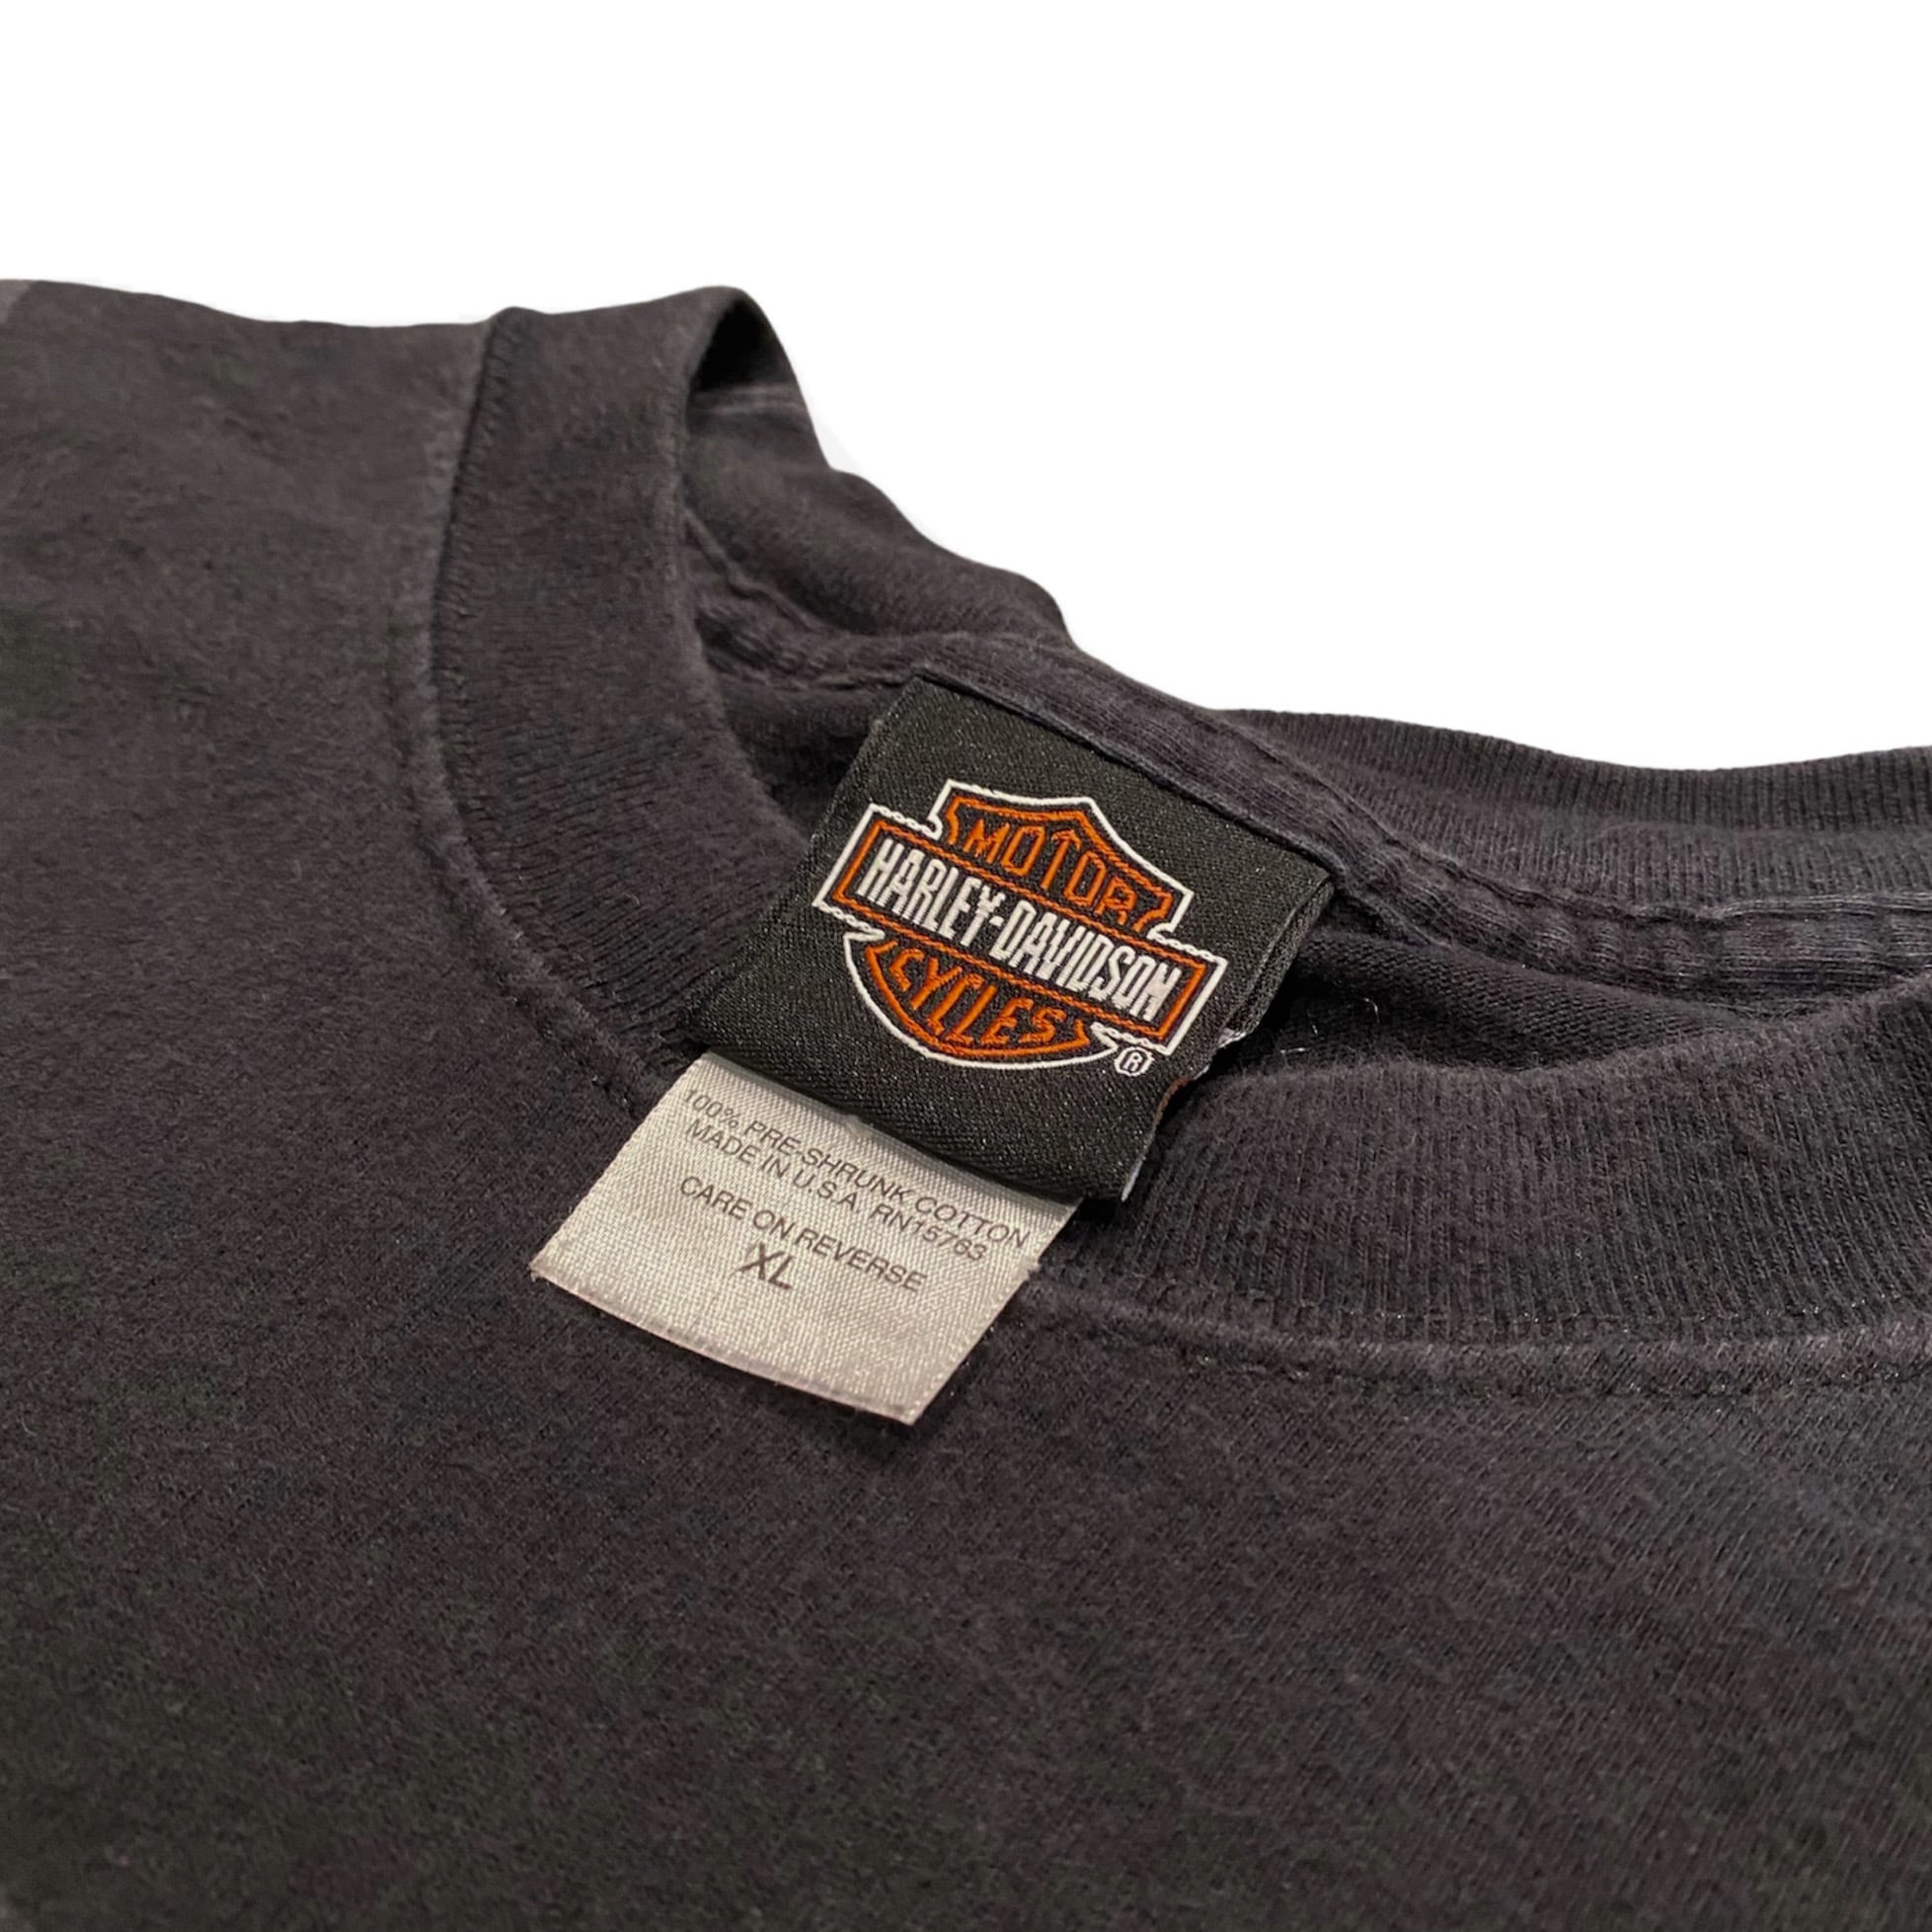 00's USA製 Harley Davidson T-Shirt XL / ハーレーダビッドソン Tシャツ vintage ヴィンテージ 古着